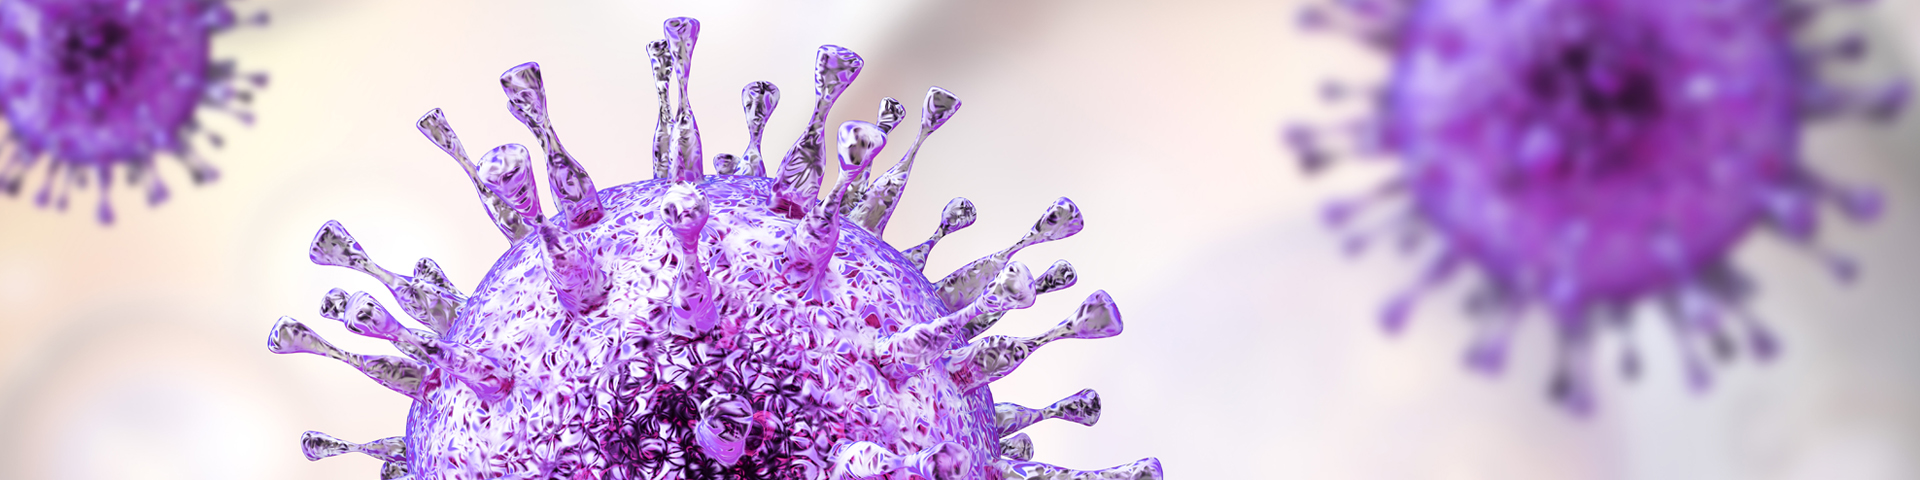 Molecular Virology Core: Cytomegalovirus Image